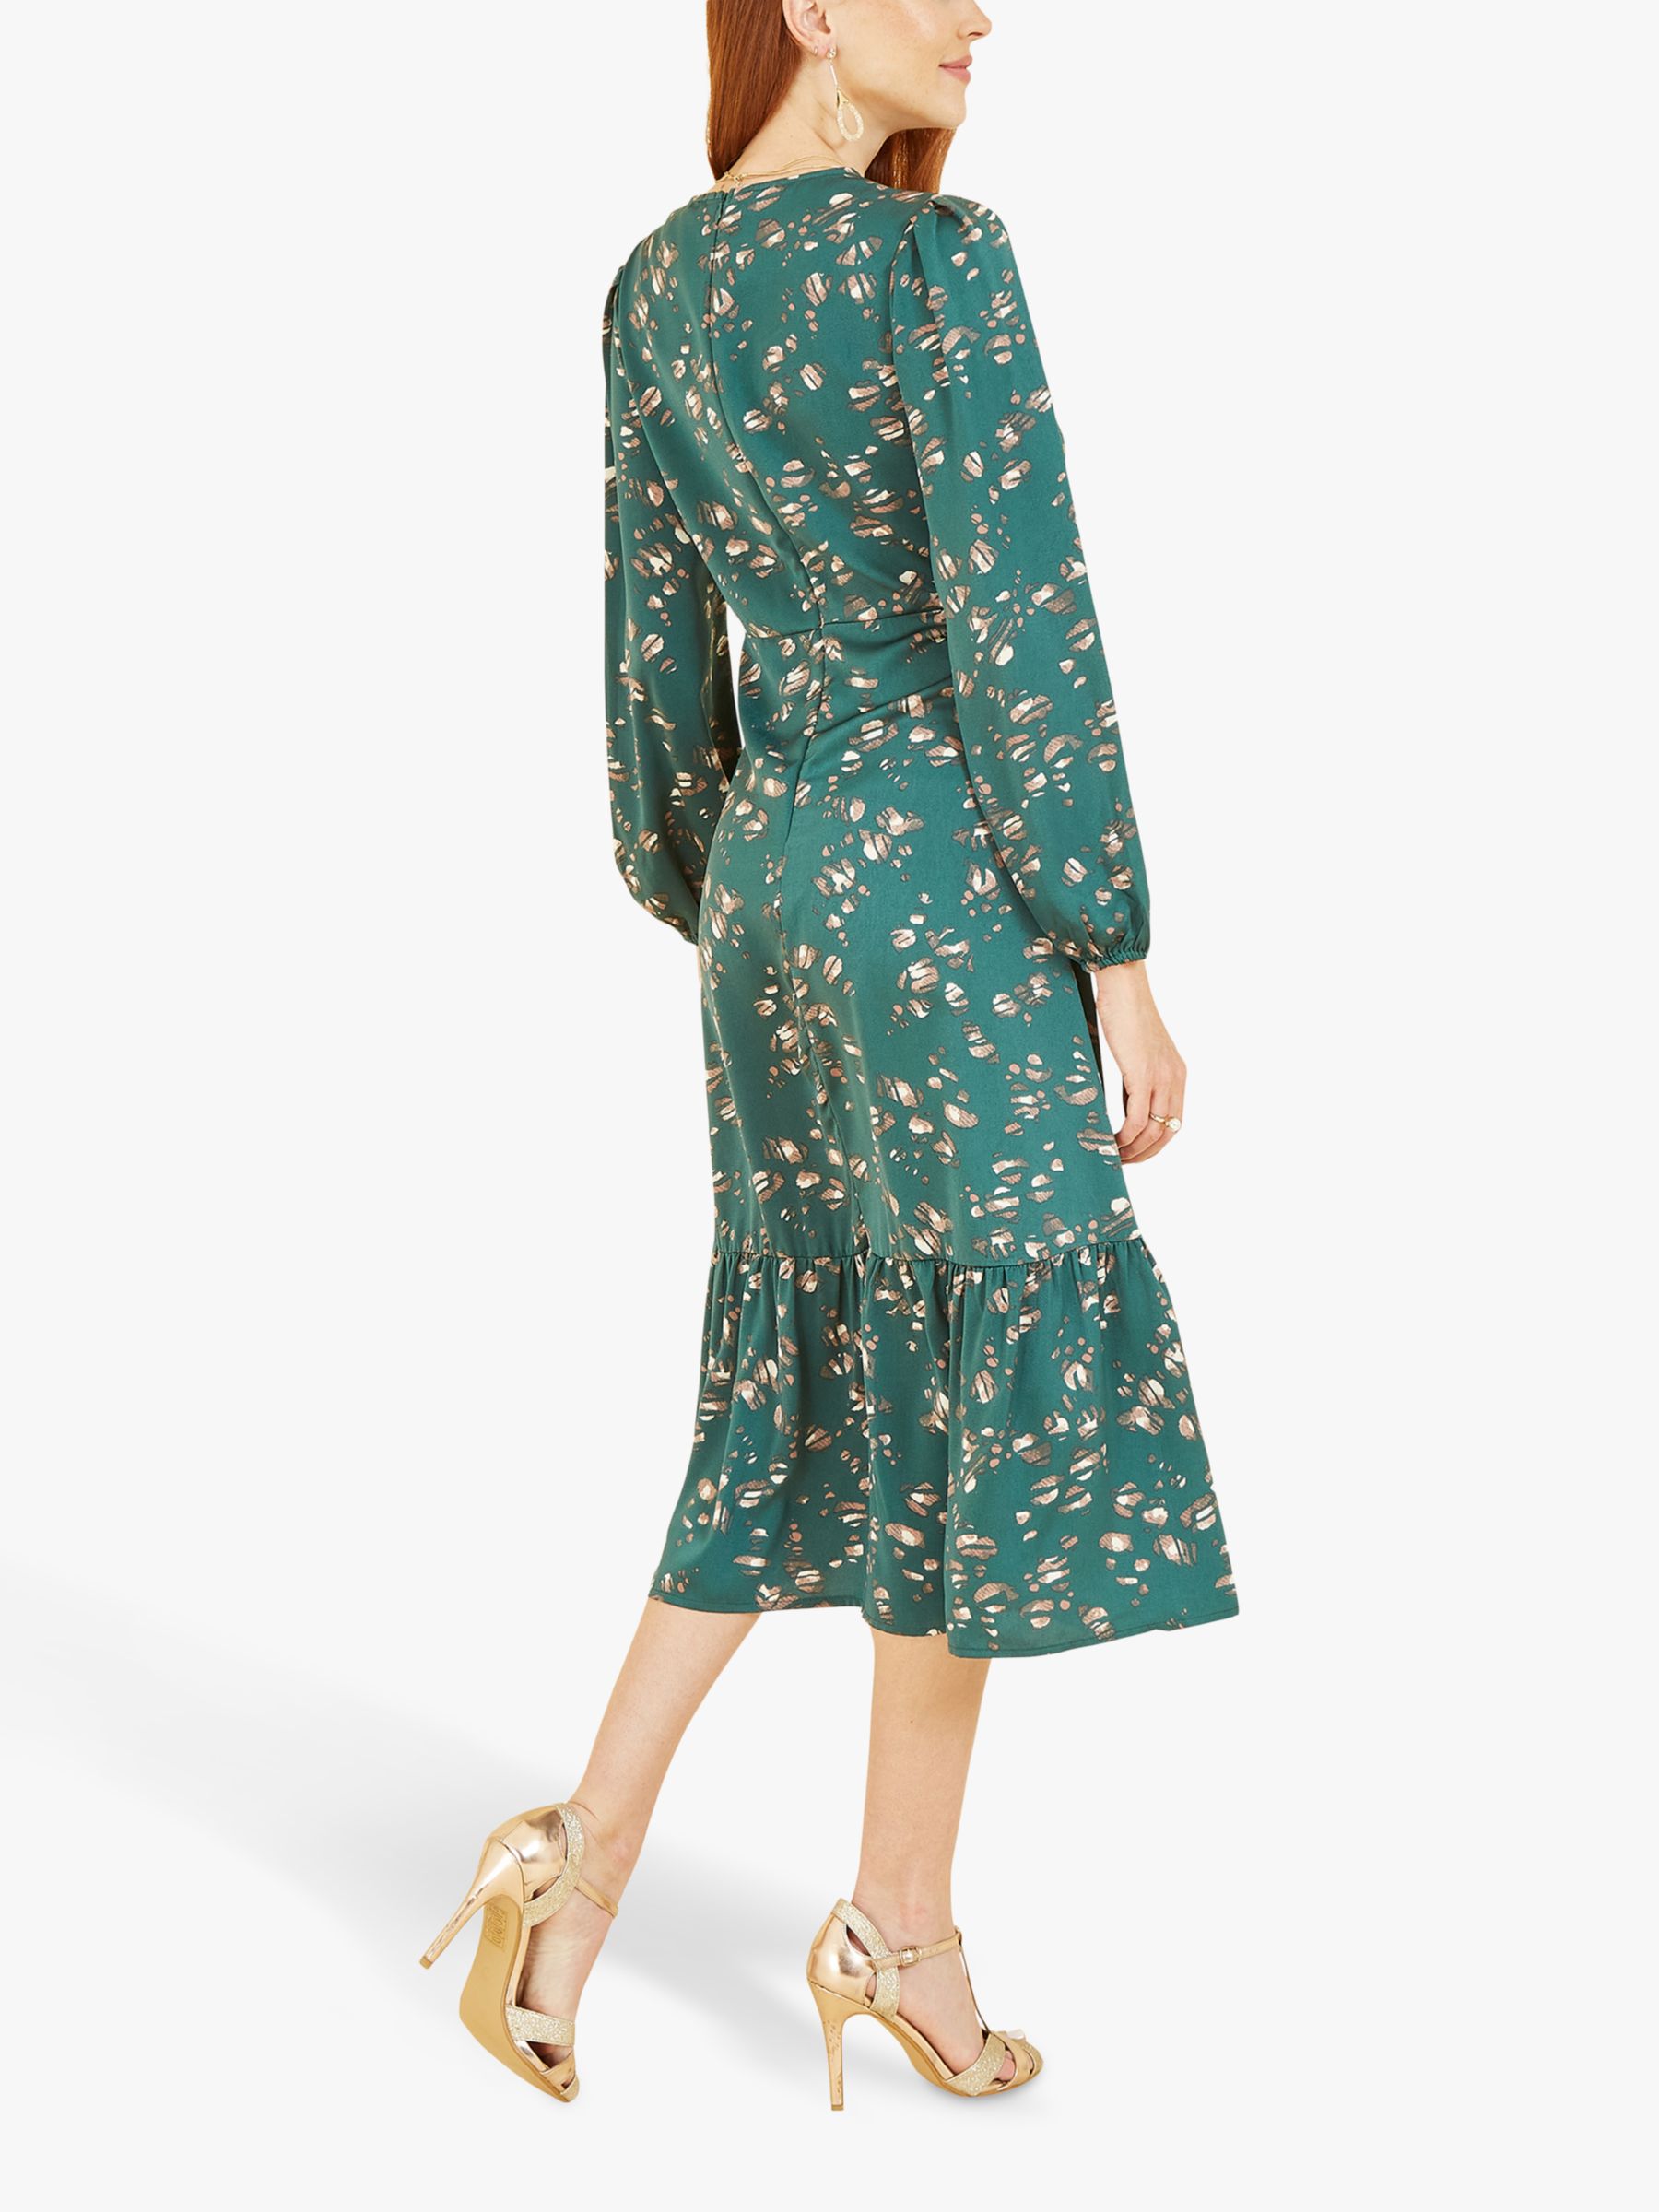 Yumi Pebble Print Tiered Hem Midi Dress, Green at John Lewis & Partners